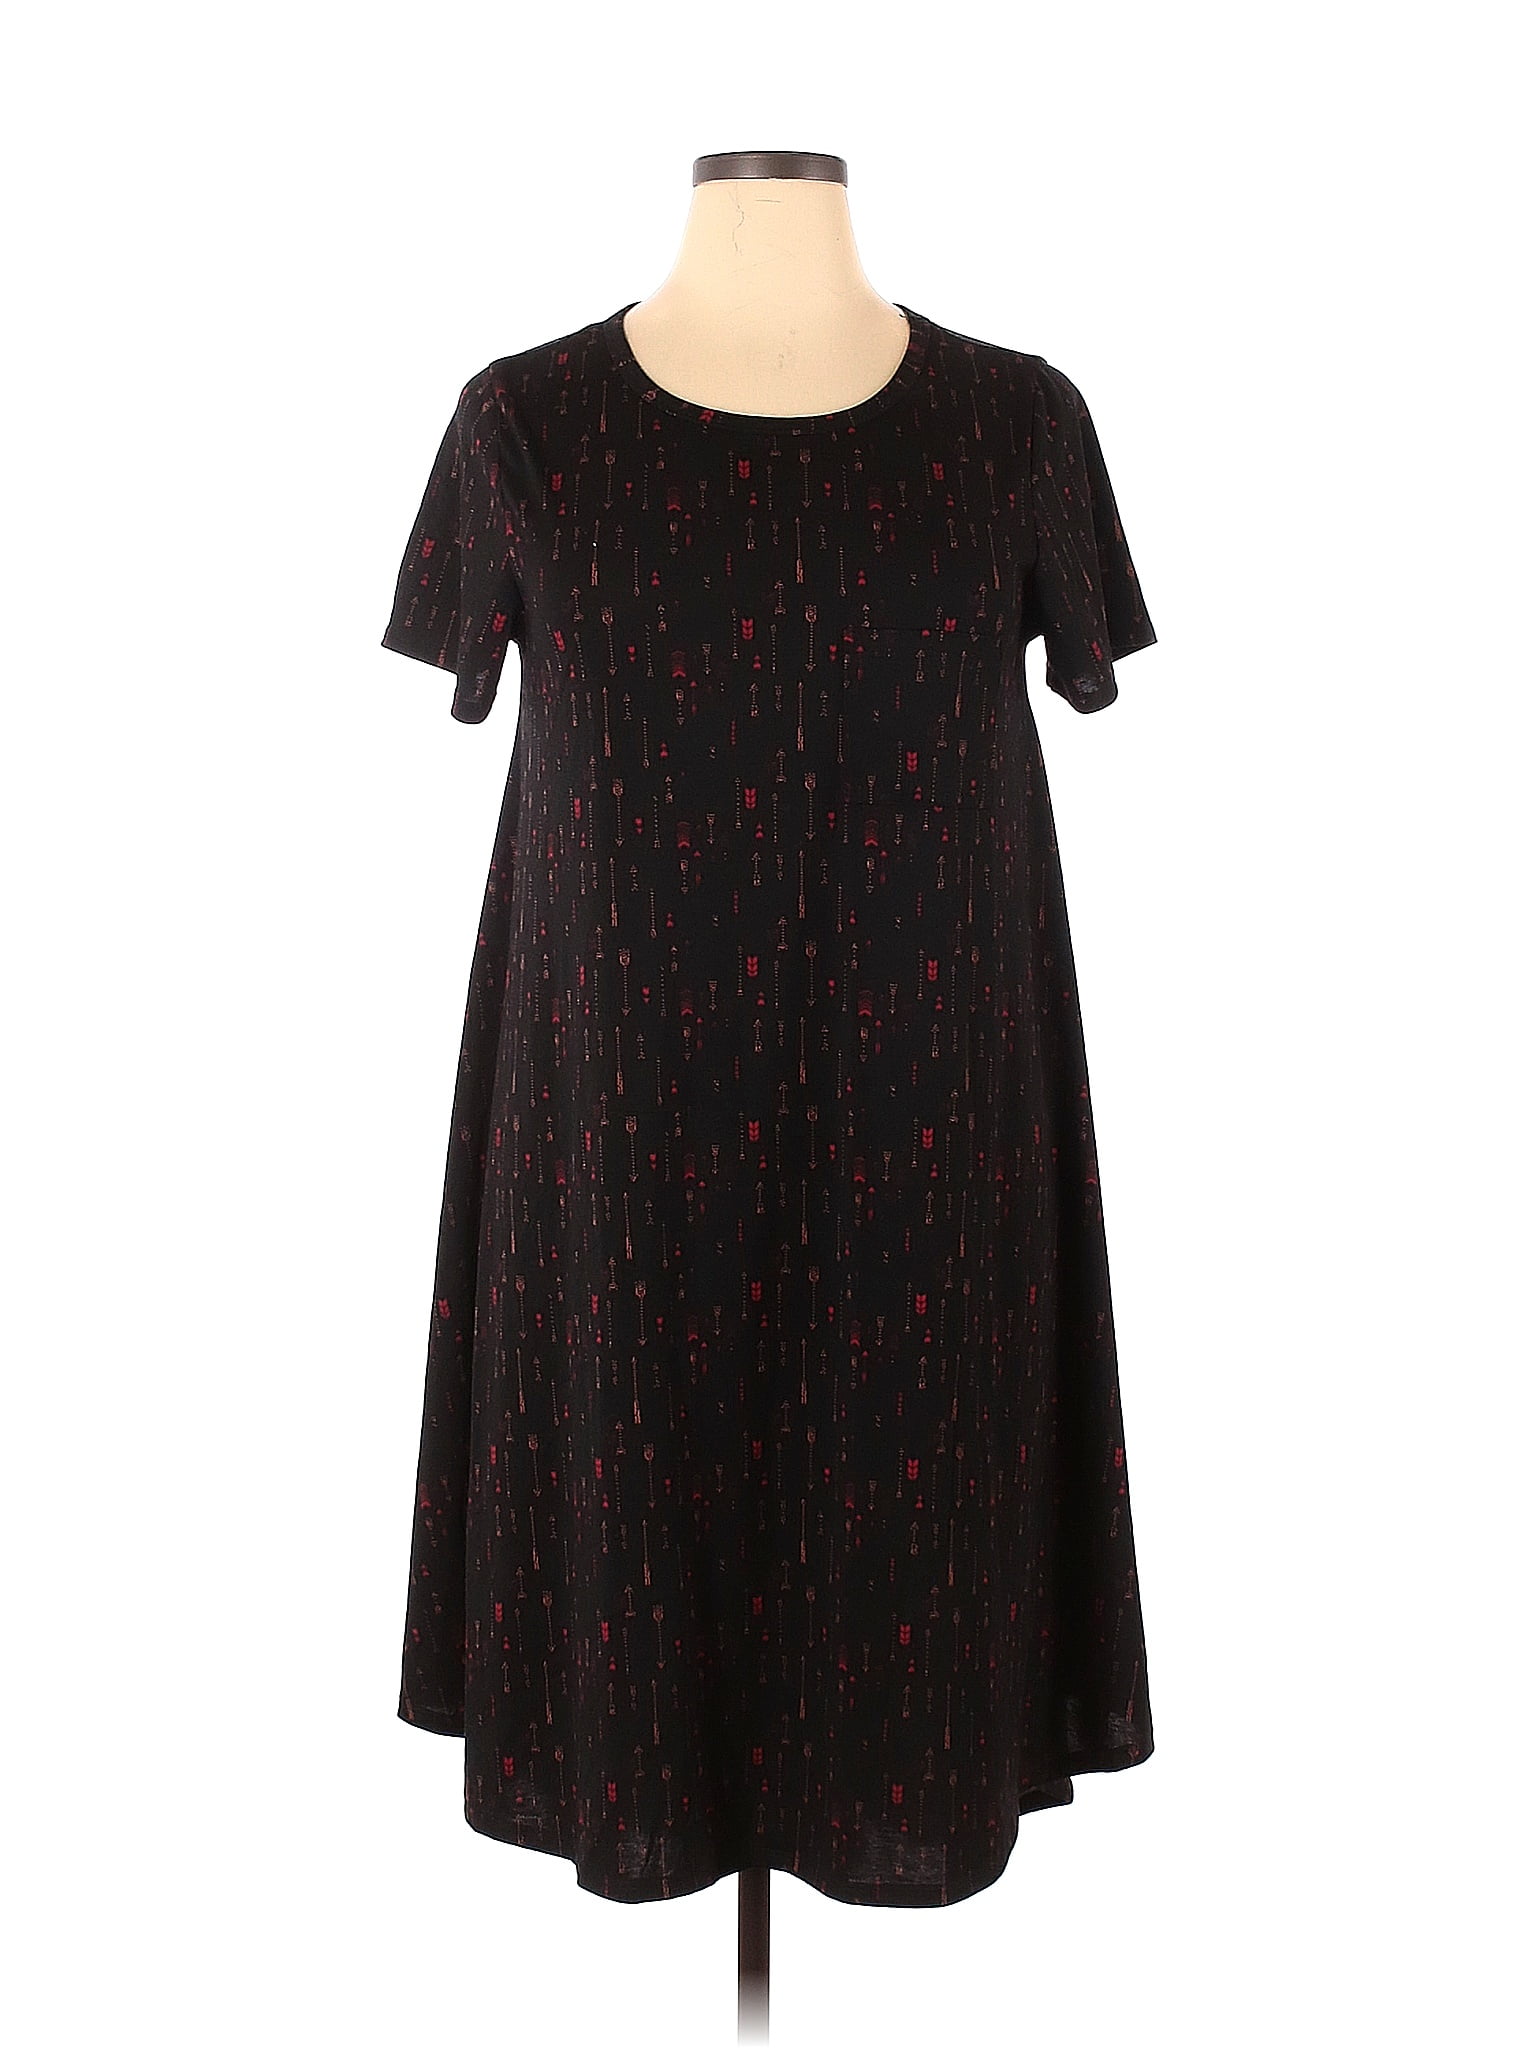 Lularoe Black Casual Dress Size XL - 58% off | thredUP